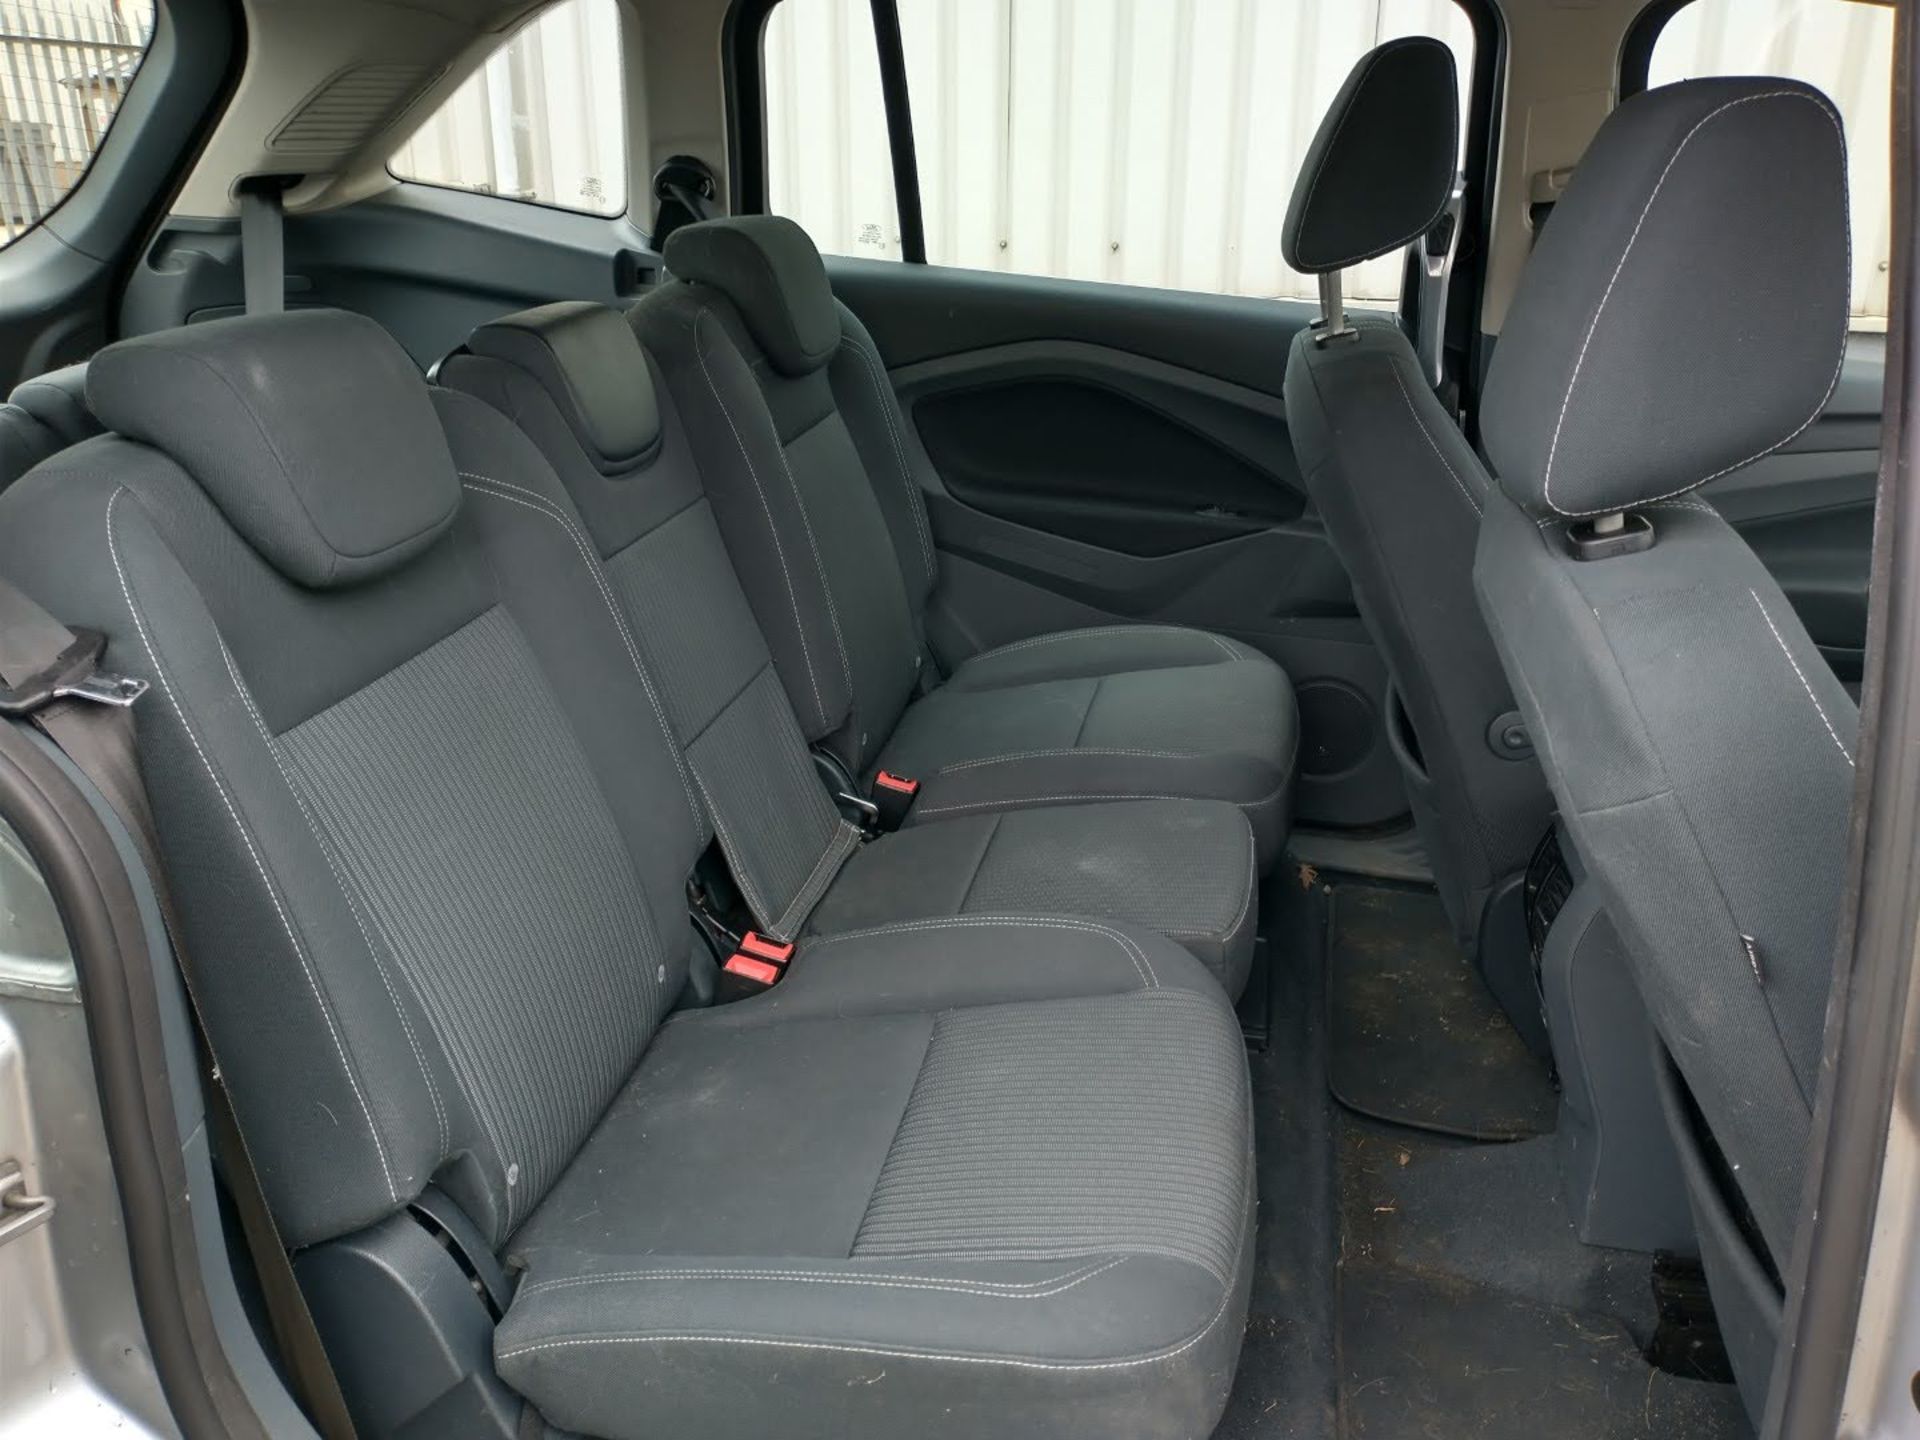 2012 Ford Grand C-Max Titanium Tdci 115 7 Seat MPV - CL505 - Ref: VVS0002 - NO VAT ON THE HAMMER - L - Image 11 of 24